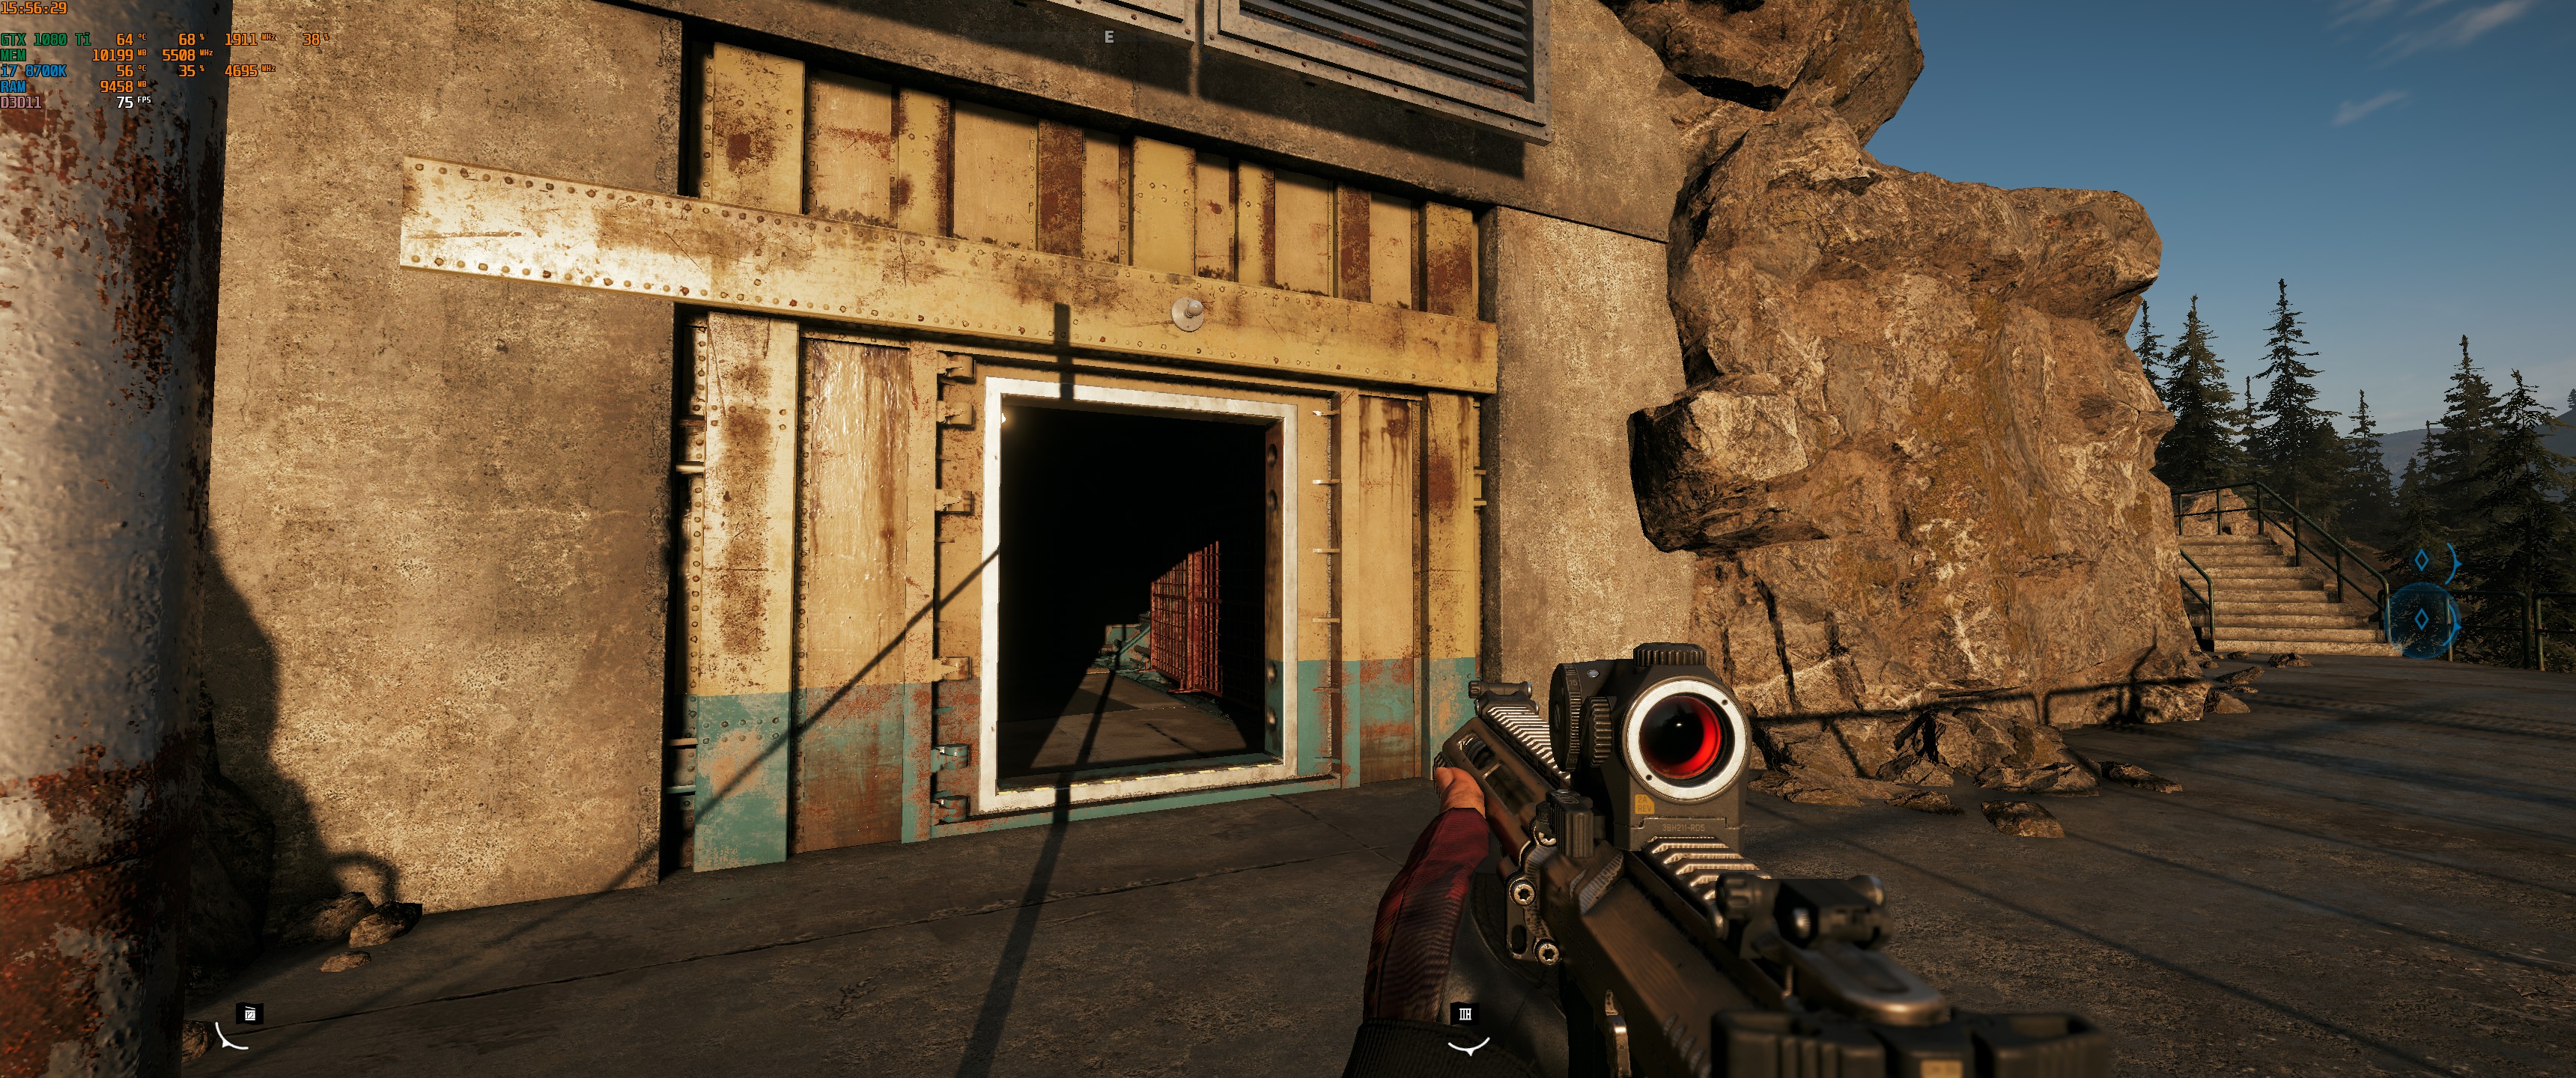 Far Cry Modding - Resistance mod